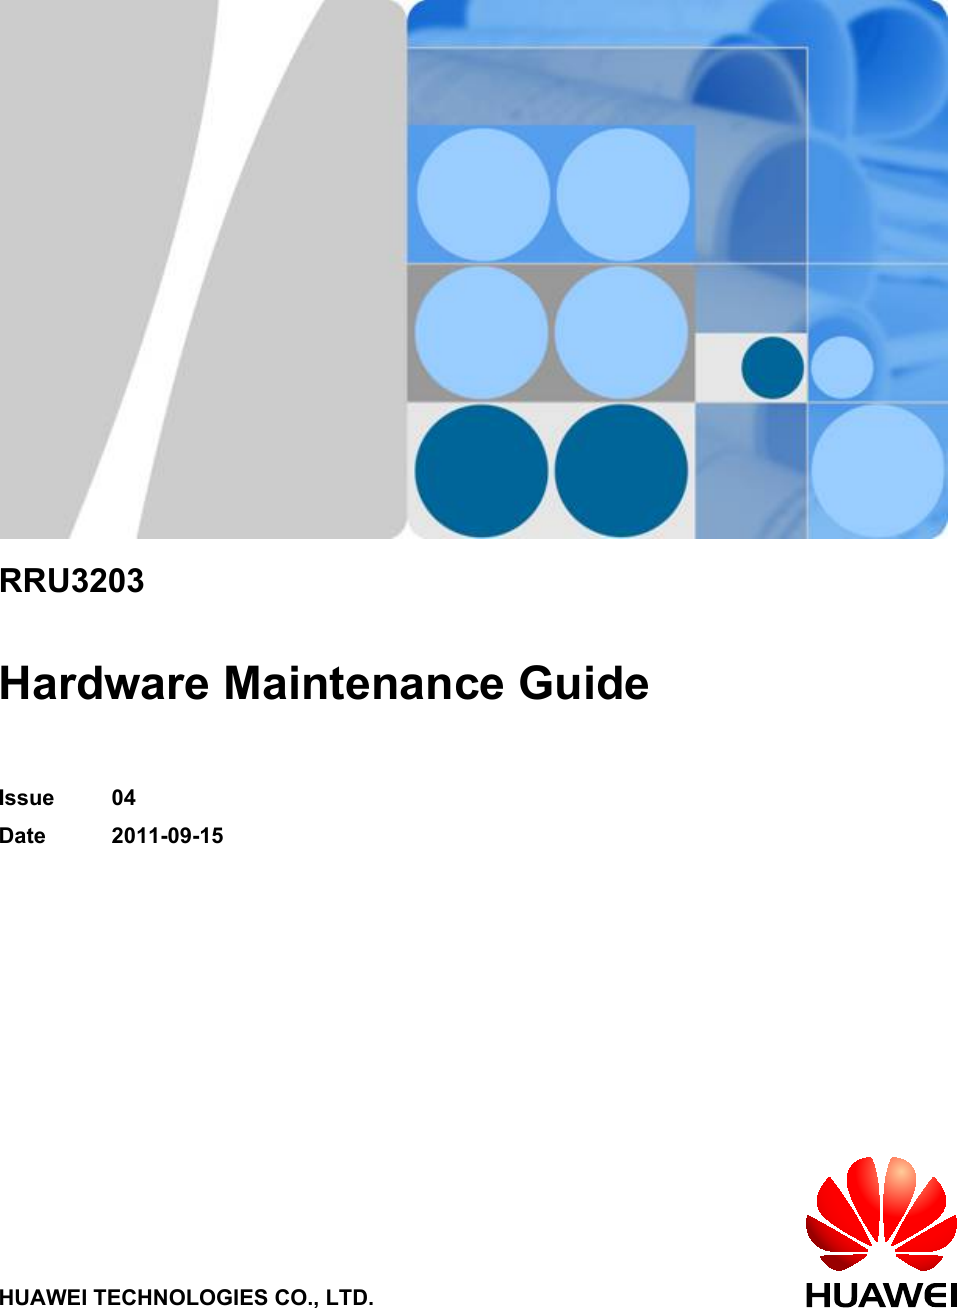 RRU3203Hardware Maintenance GuideIssue 04Date 2011-09-15HUAWEI TECHNOLOGIES CO., LTD.